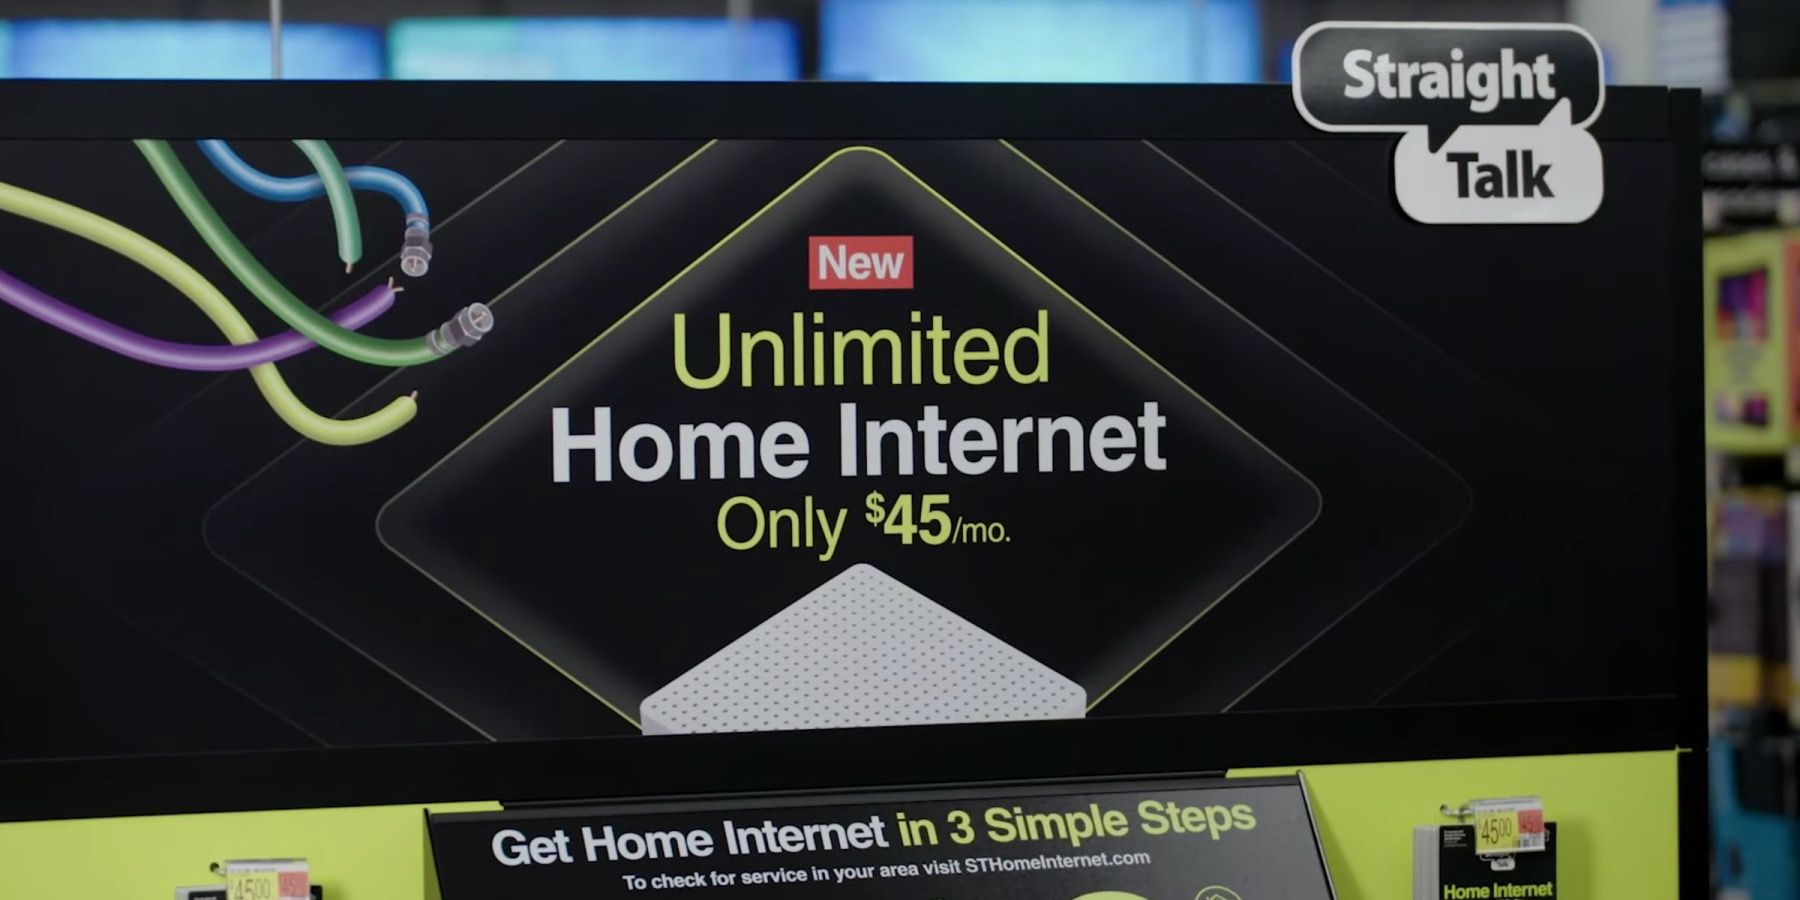 Straight Talk Home Internet by Verizon and Walmart.